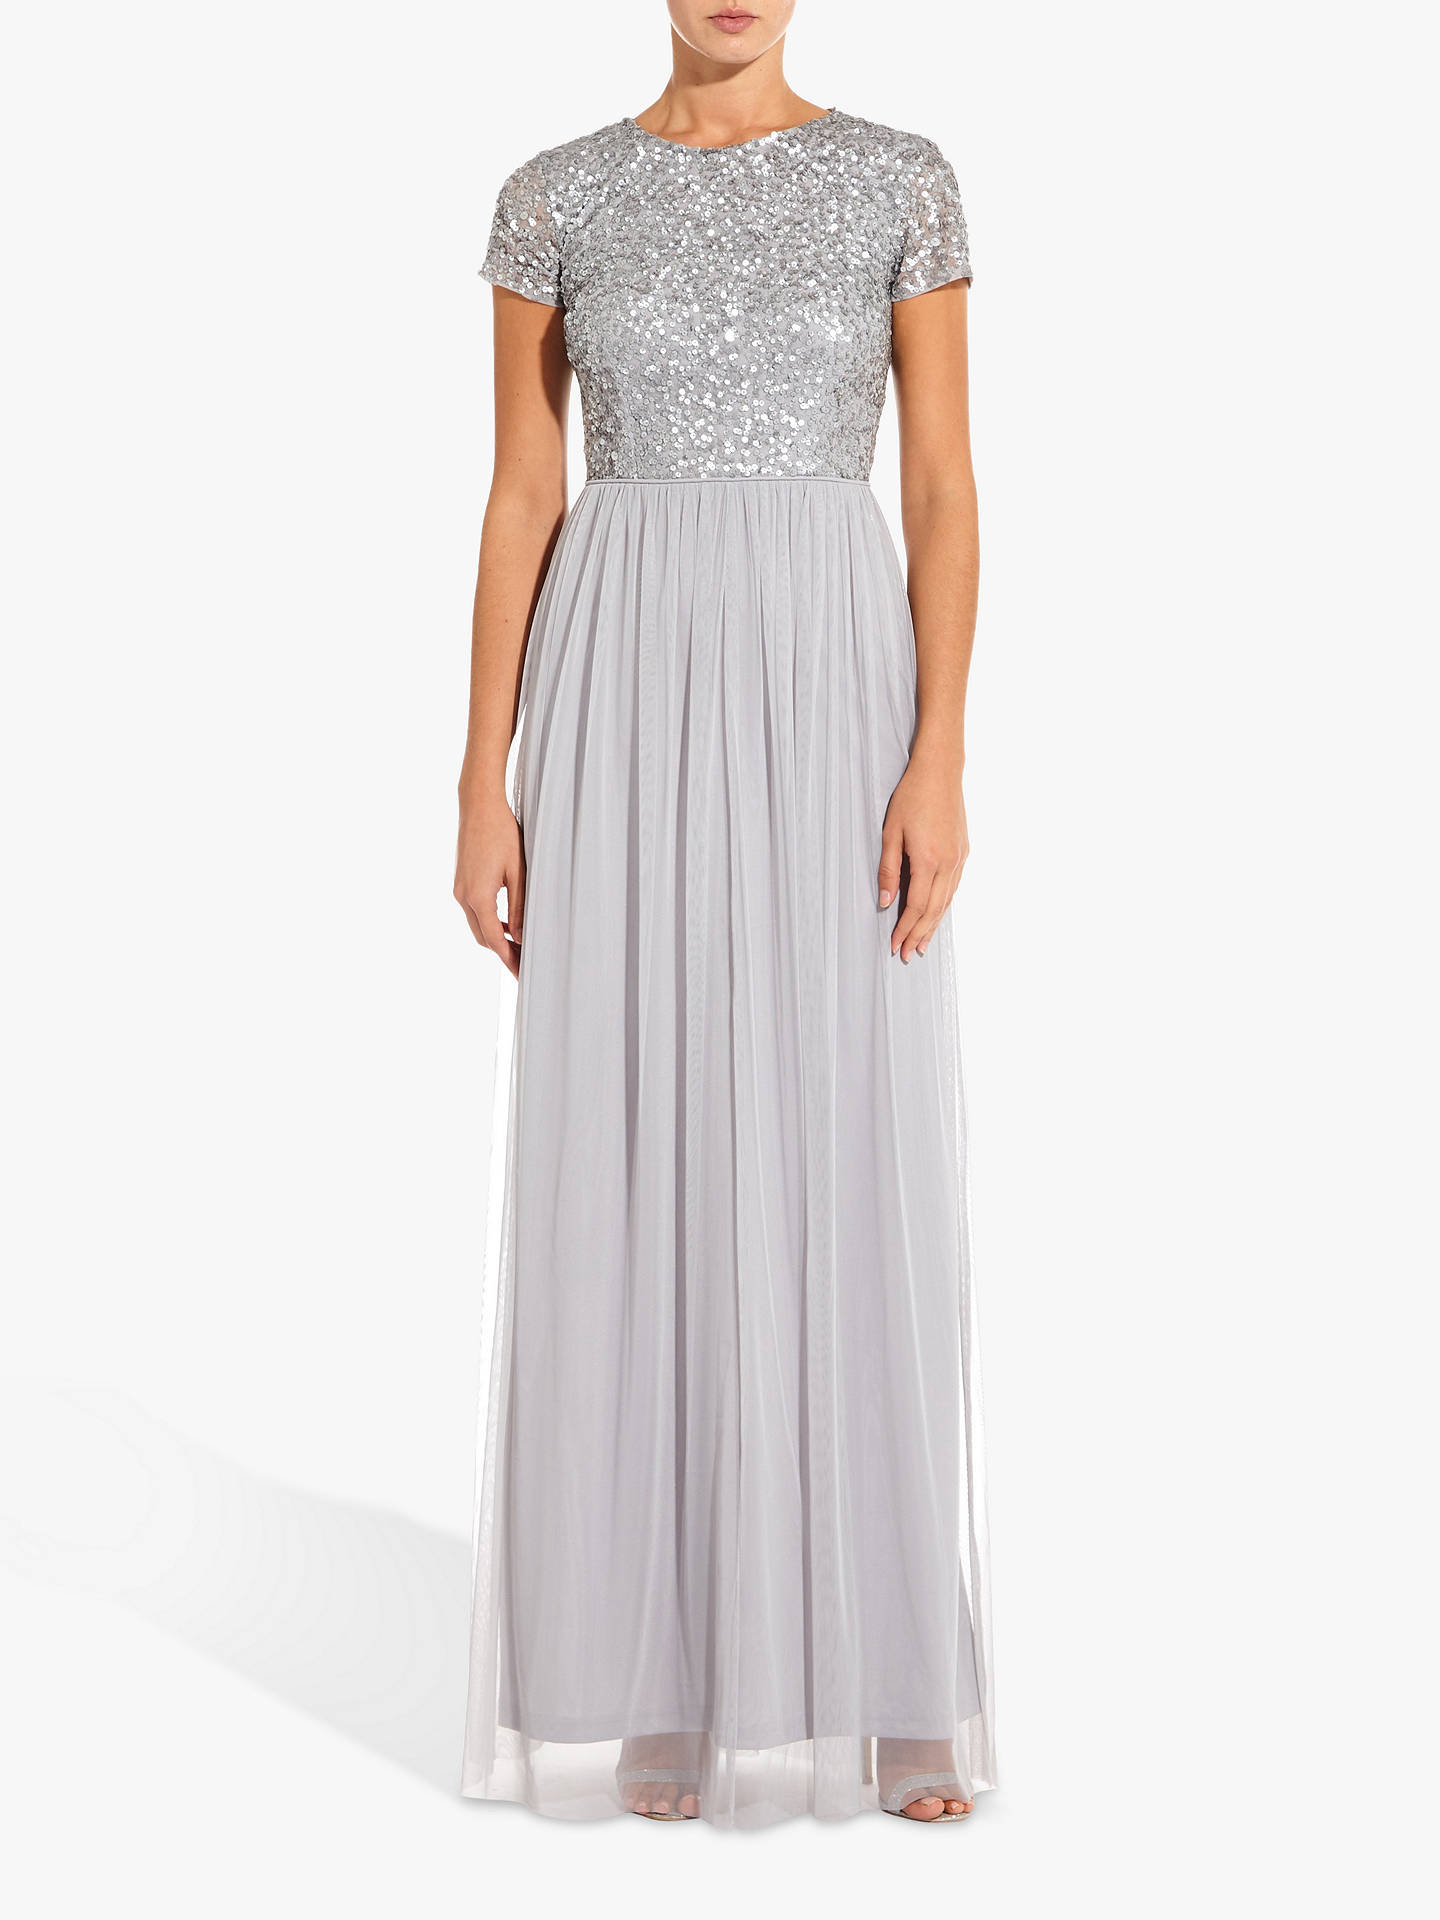 Adrianna Papell Wedding Dress John Lewis - bestweddingdresses